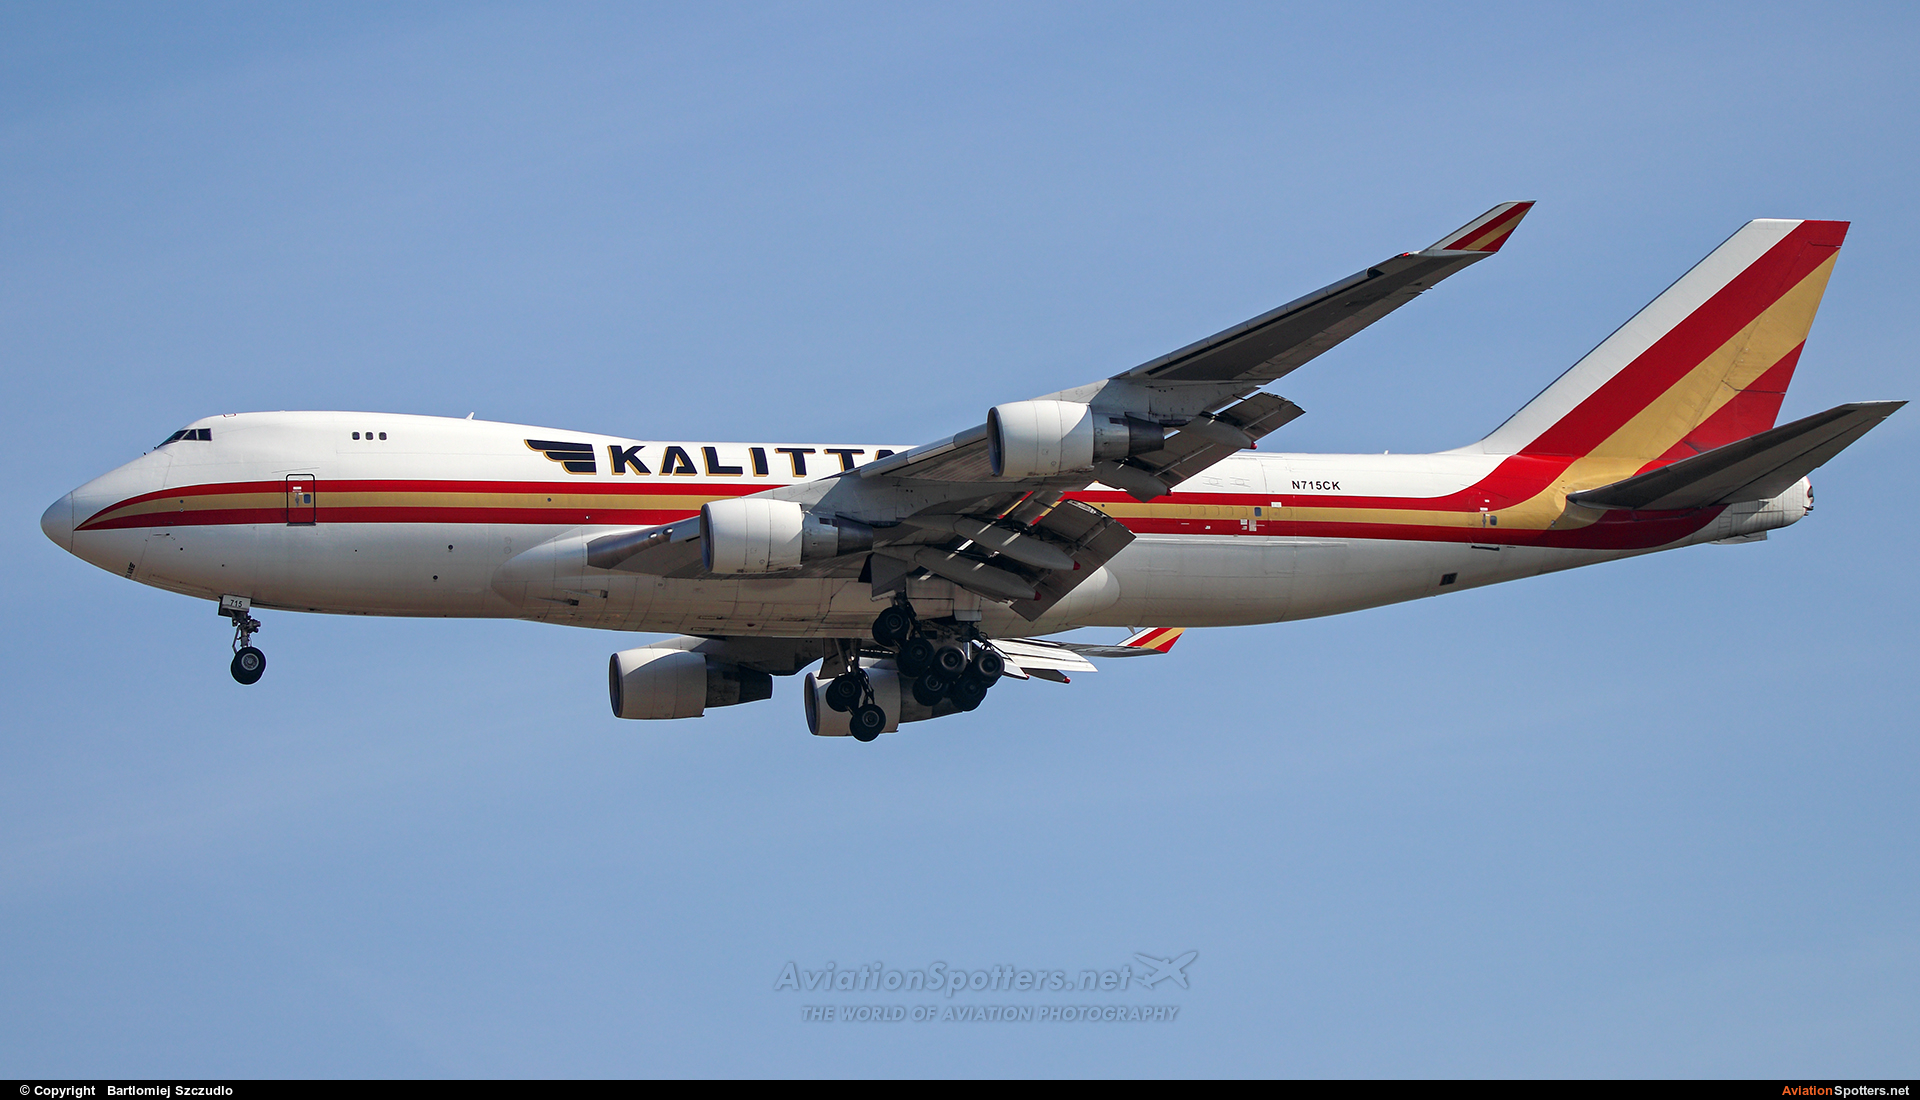 Kalitta Air  -  747-400F  (N715CK) By Bartlomiej Szczudlo  (BartekSzczudlo)